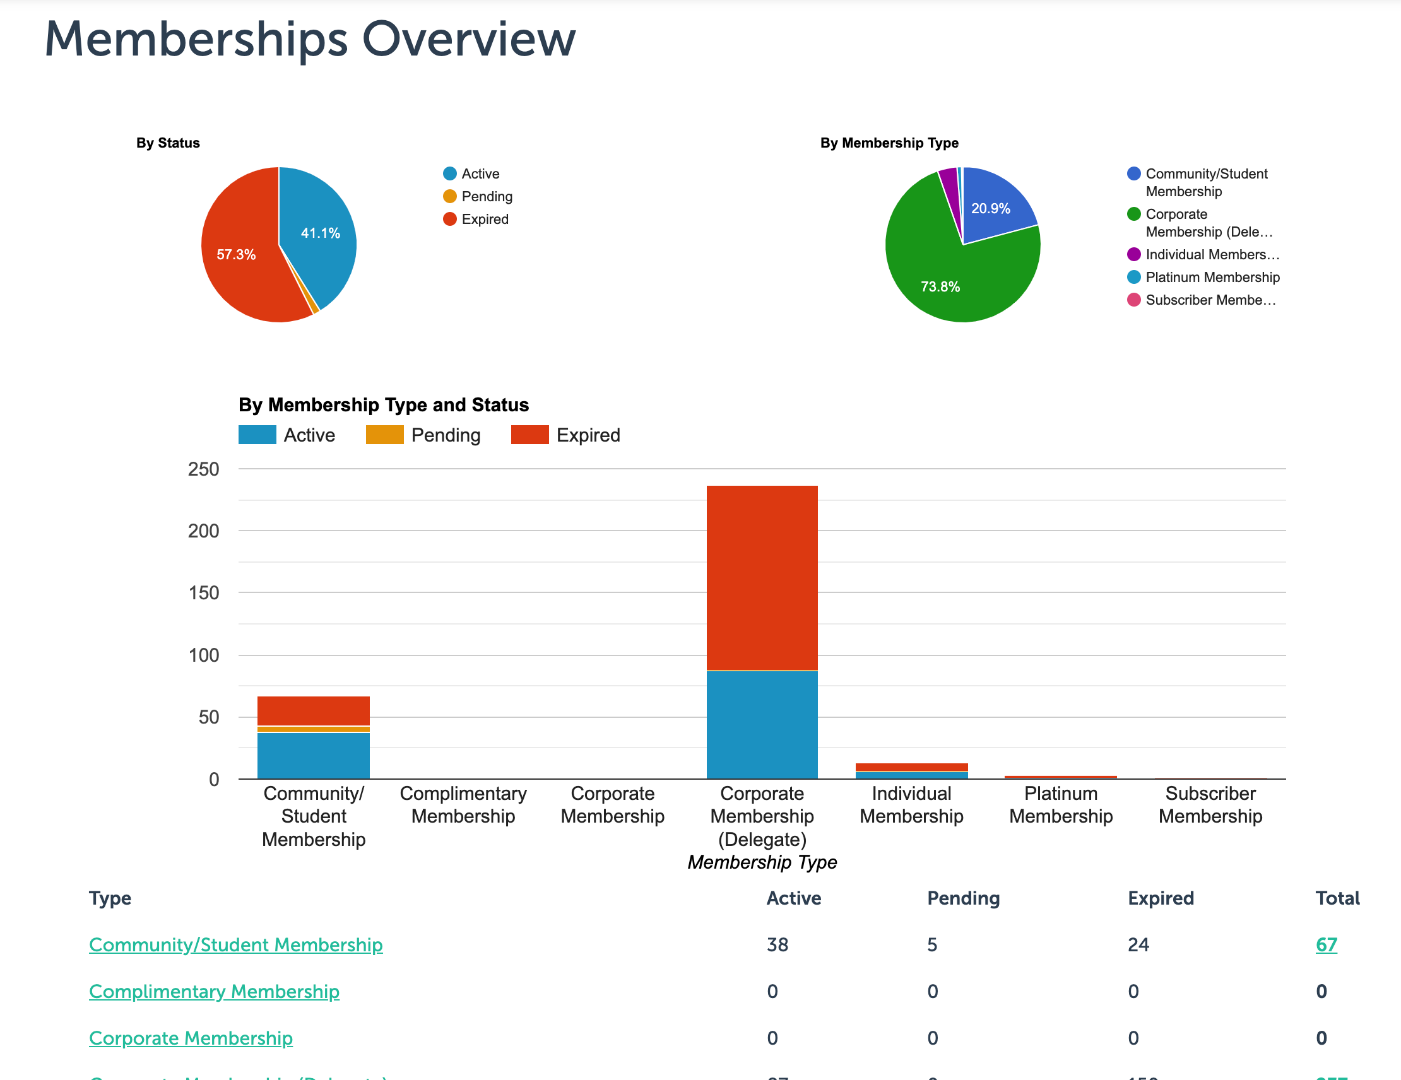 Screenshot - memberships by type and status pie charts